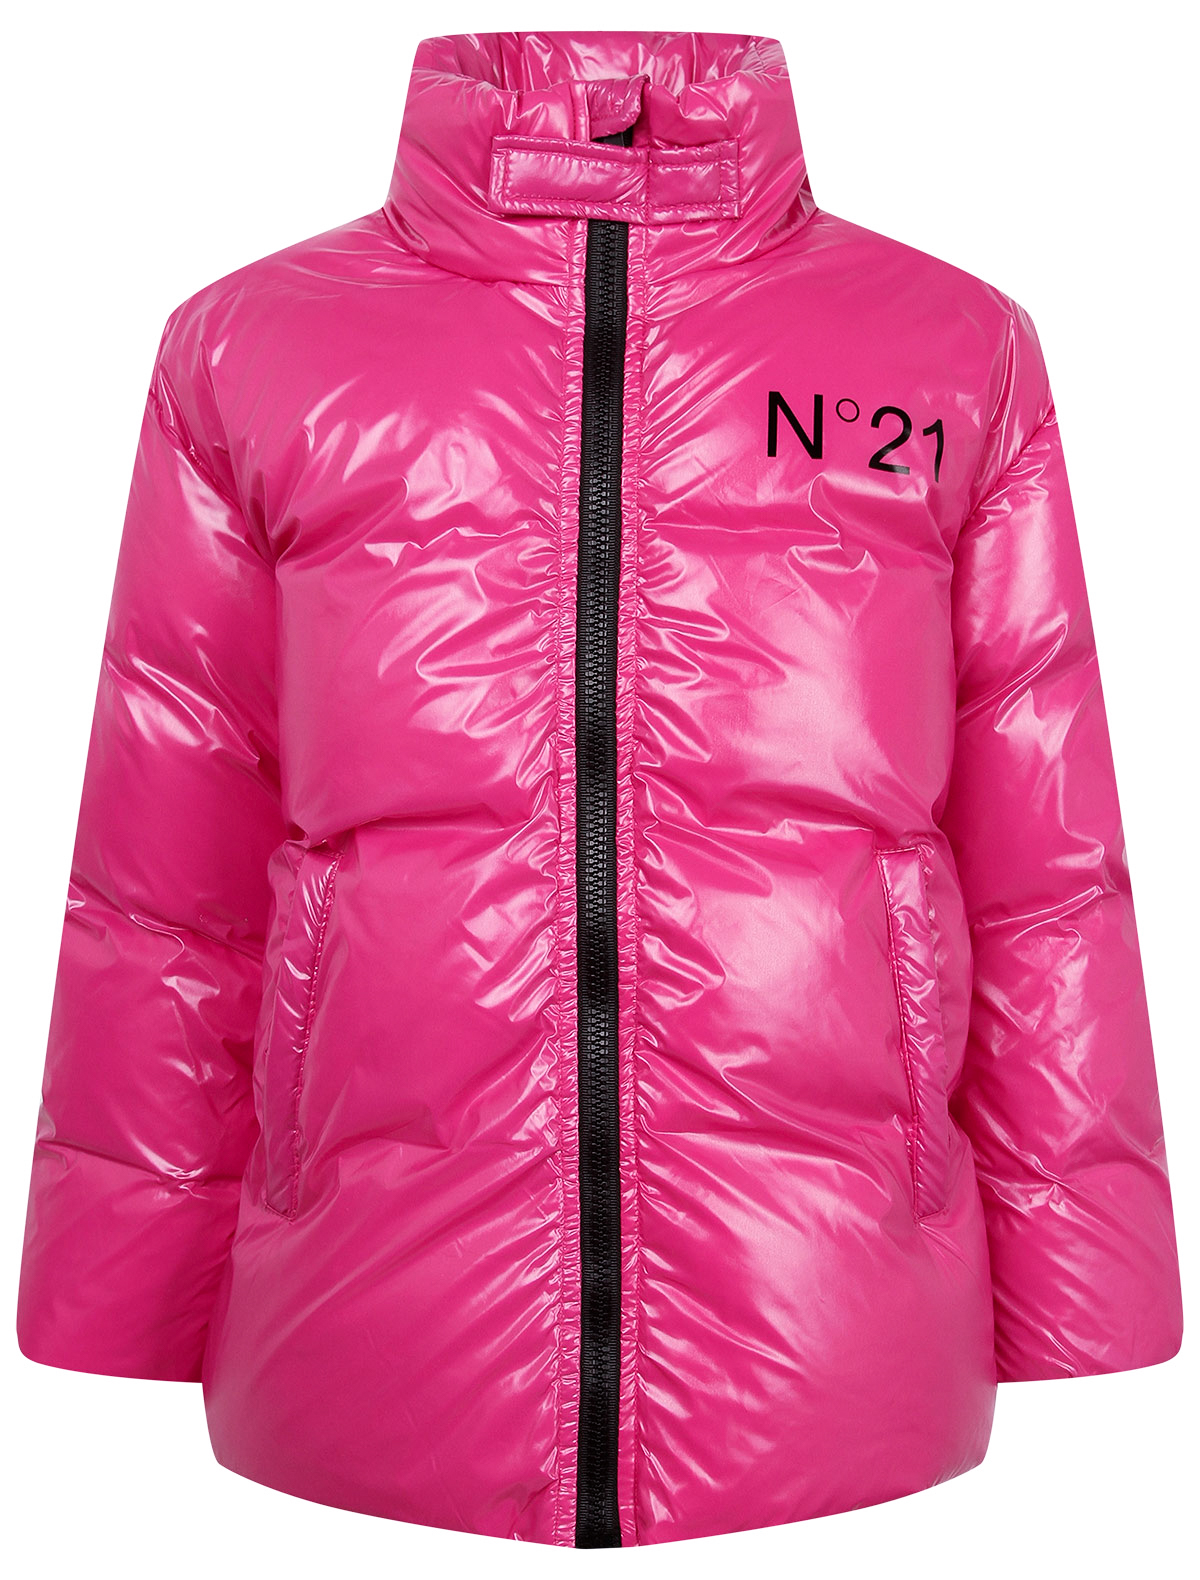 Куртка №21 kids 2233286, цвет розовый, размер 15 1074509081401 - фото 1